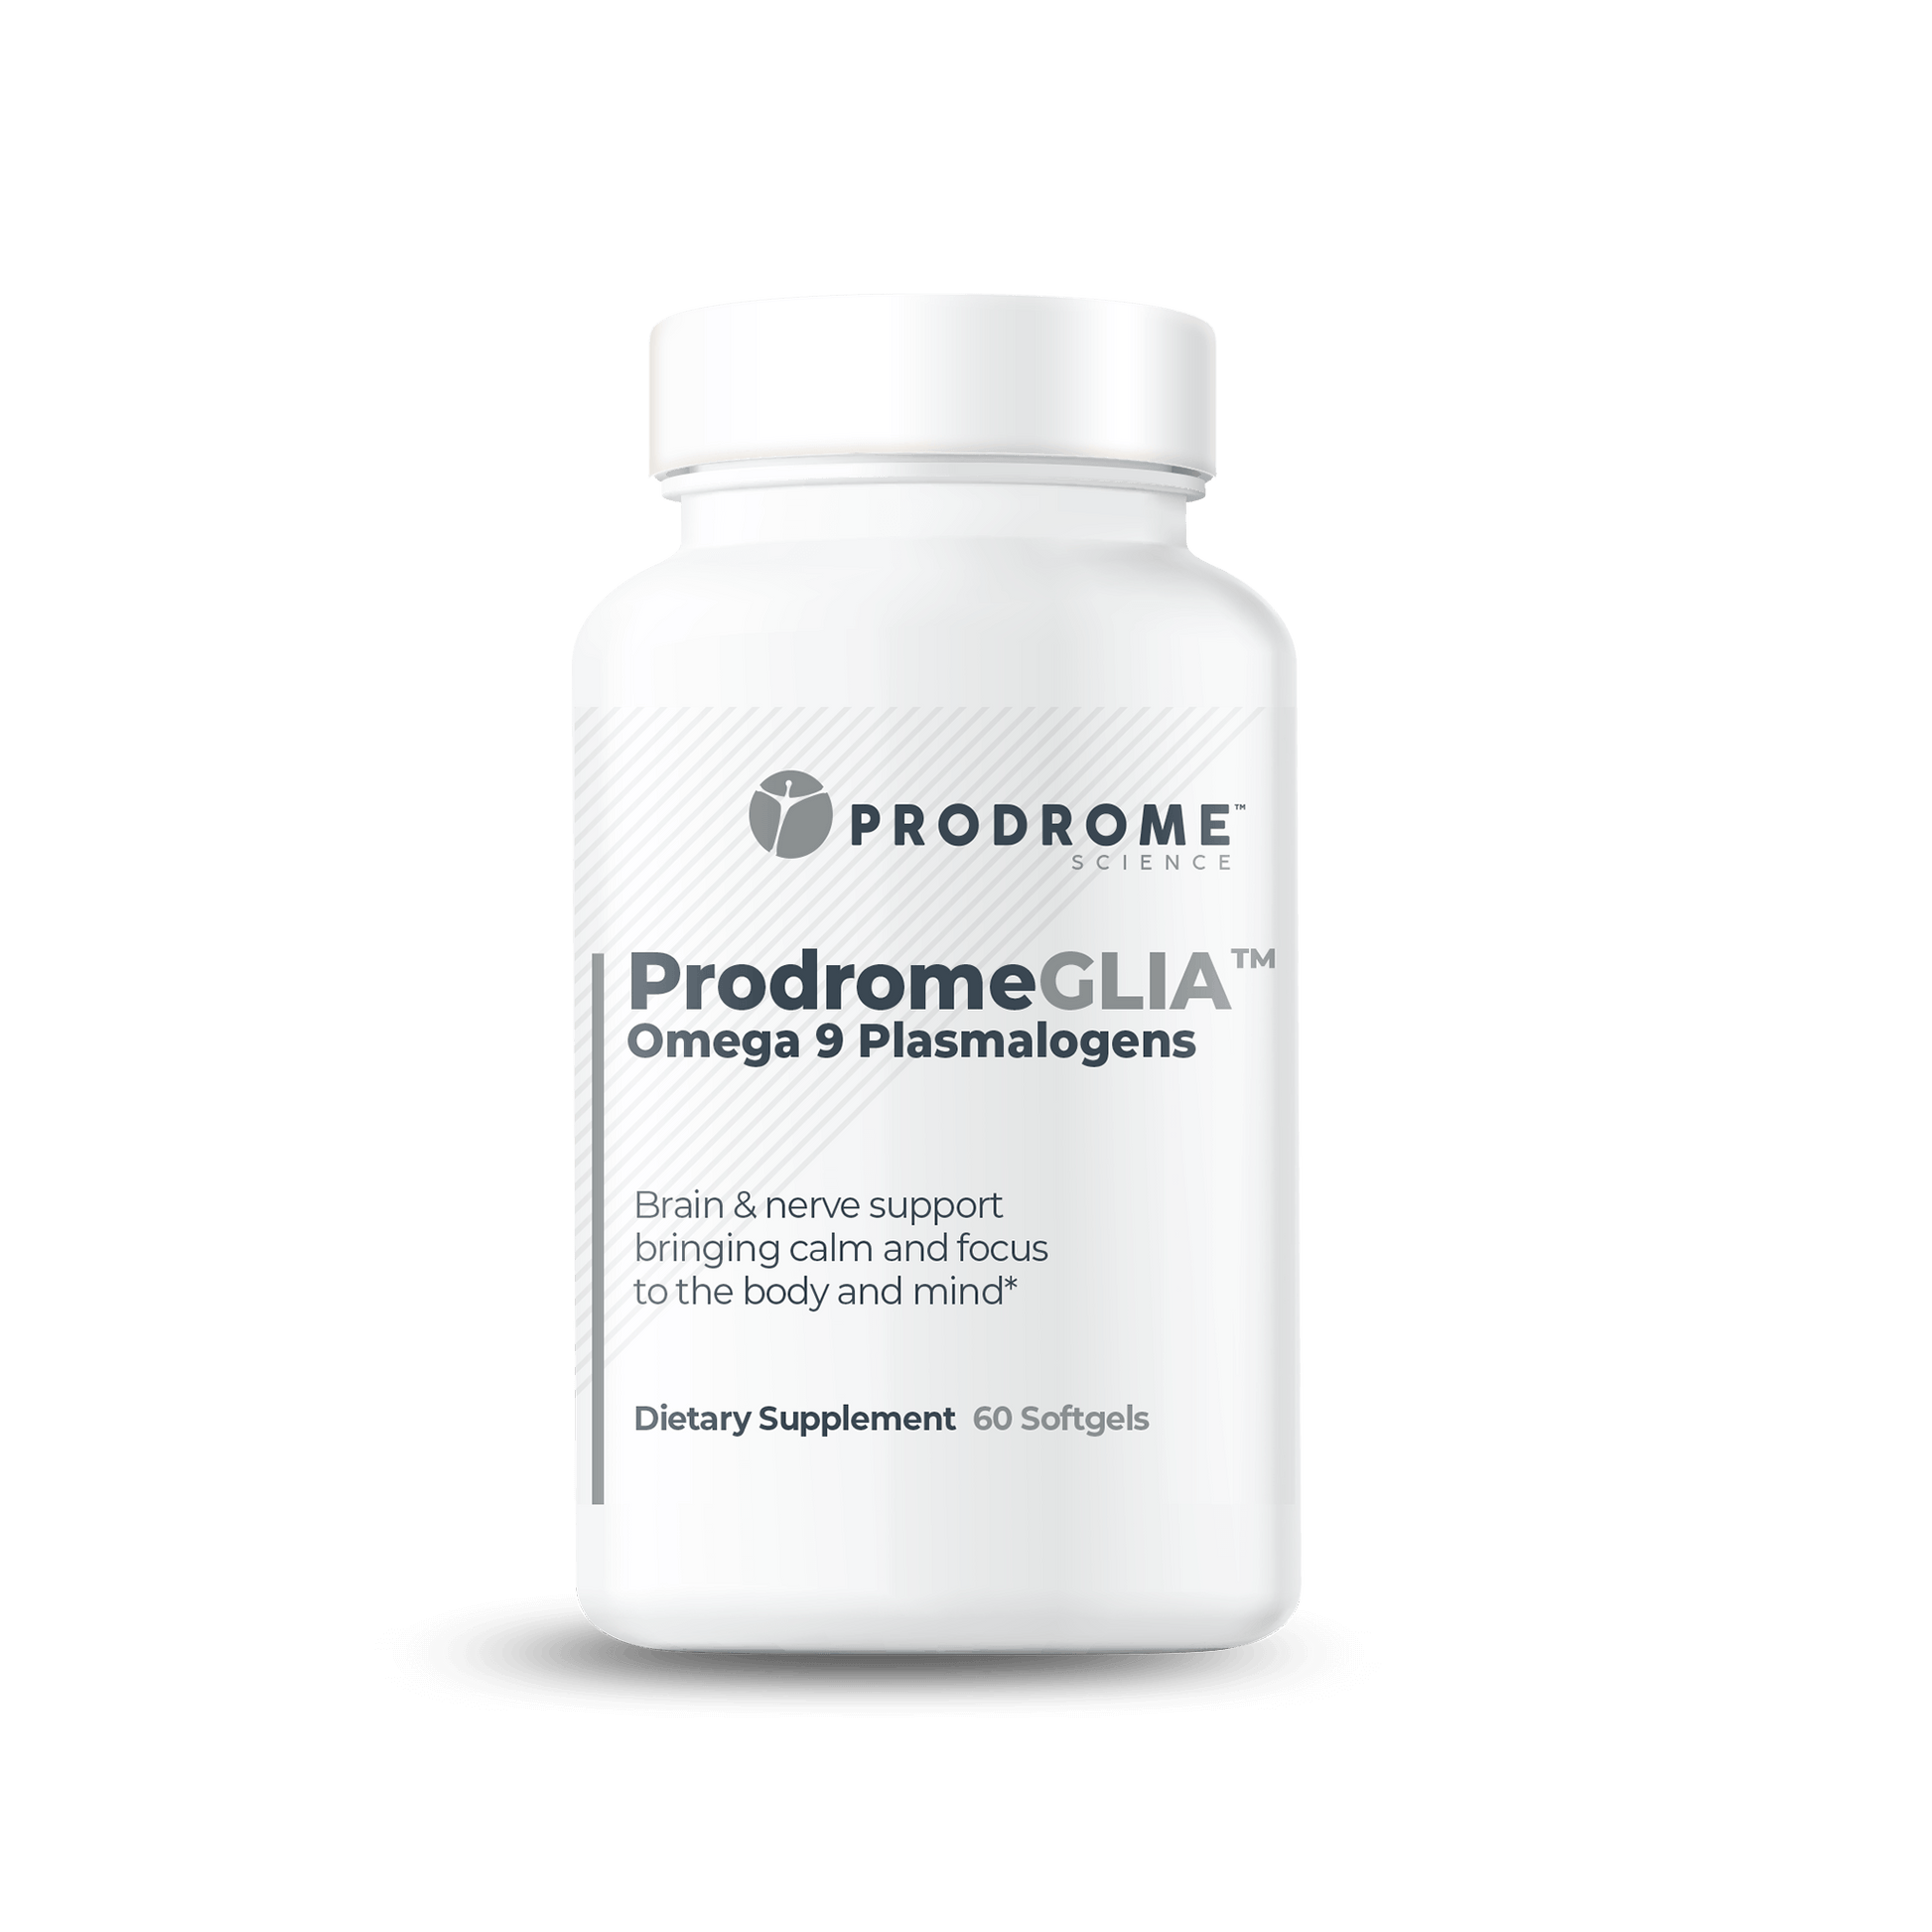 ProdromeGlia Omega 9 Plasmalogens - 60 Softgels